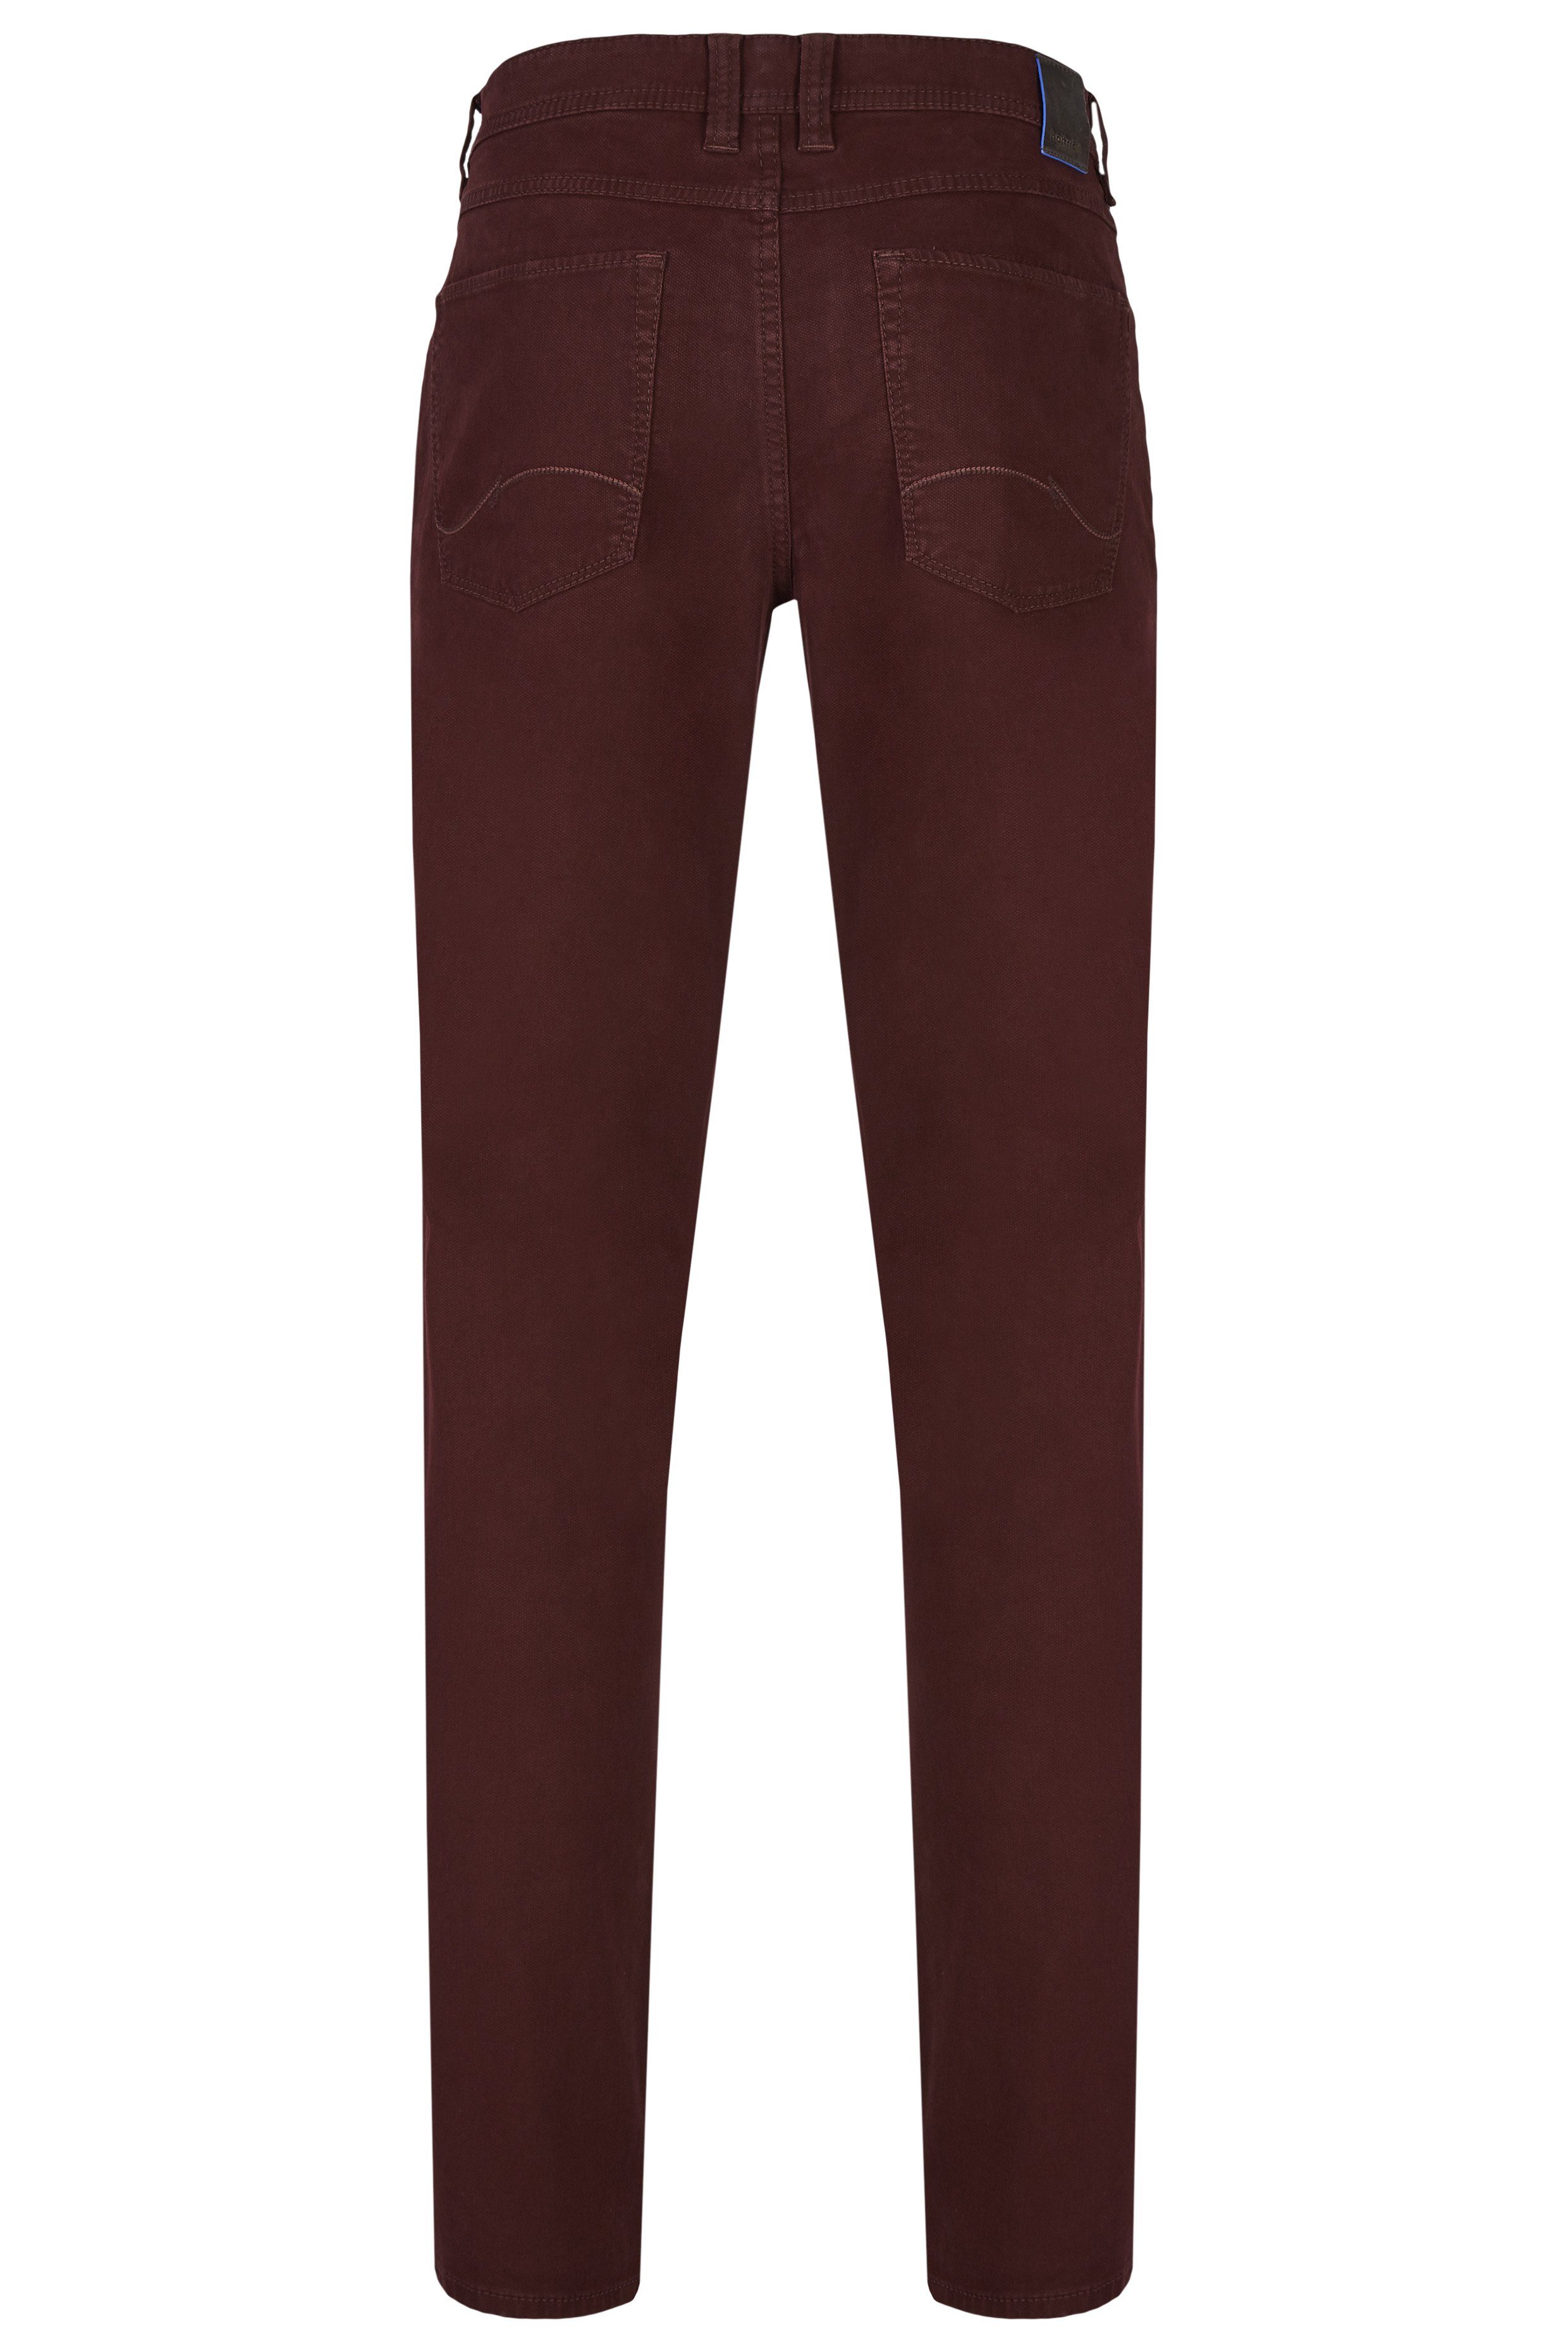 Hattric 5-Pocket-Jeans HATTRIC HUNTER dark STRUCTURE 688955 - 6334.57 COSY red